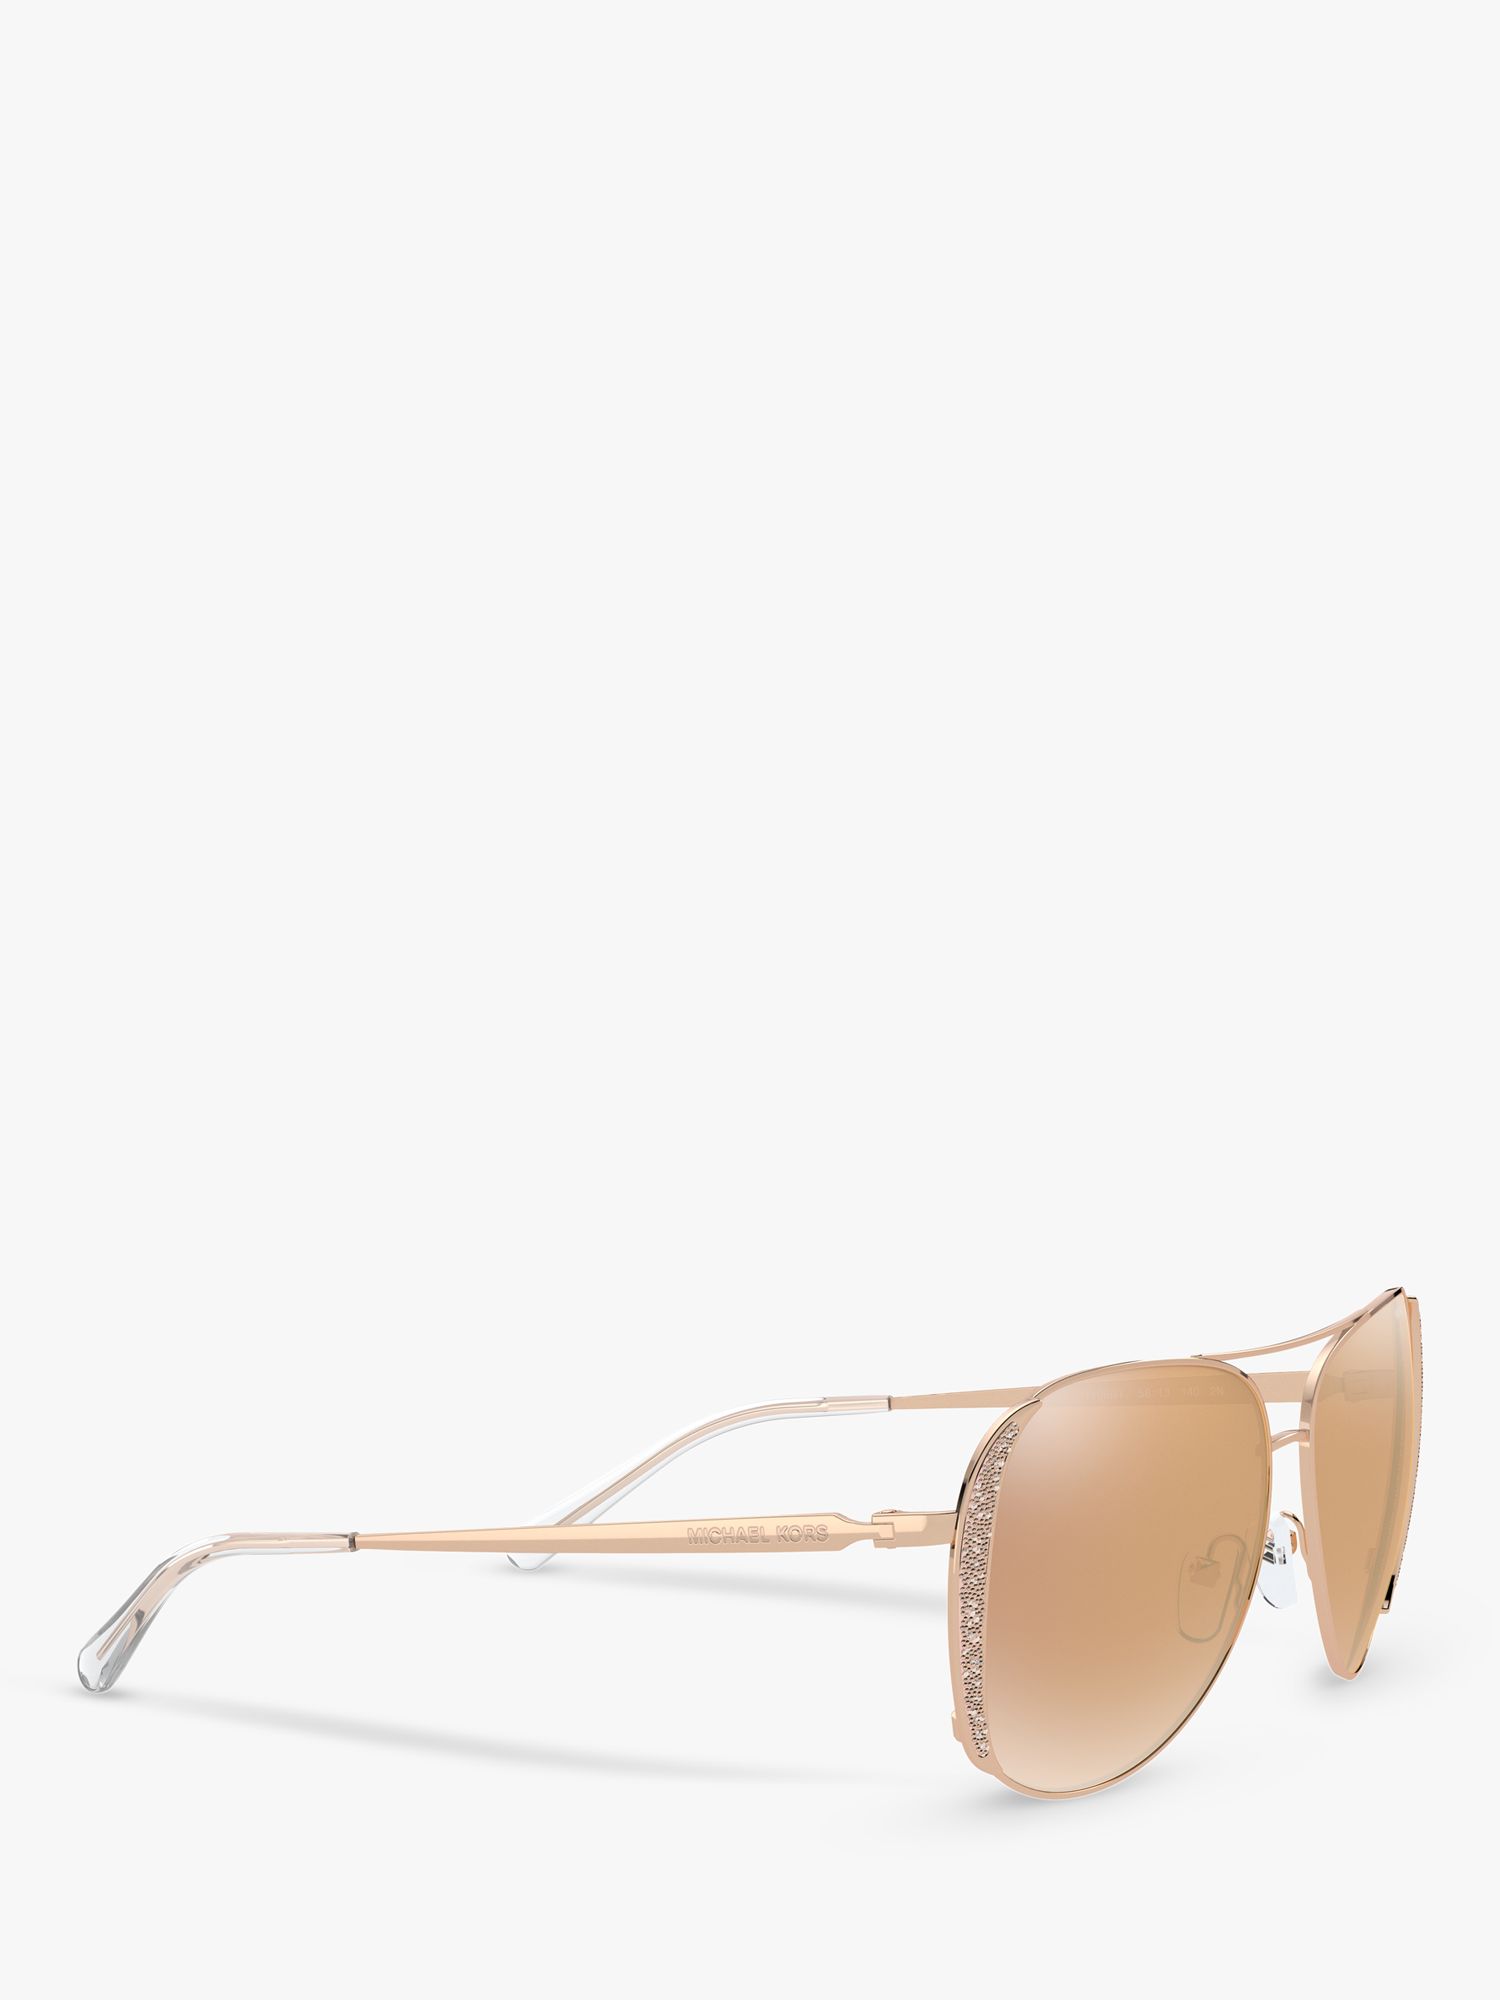 Michael Kors MK1082 Chelsea Glam Women's Pilot Sunglasses, Rose Gold/Rose  Gold Flash at John Lewis & Partners